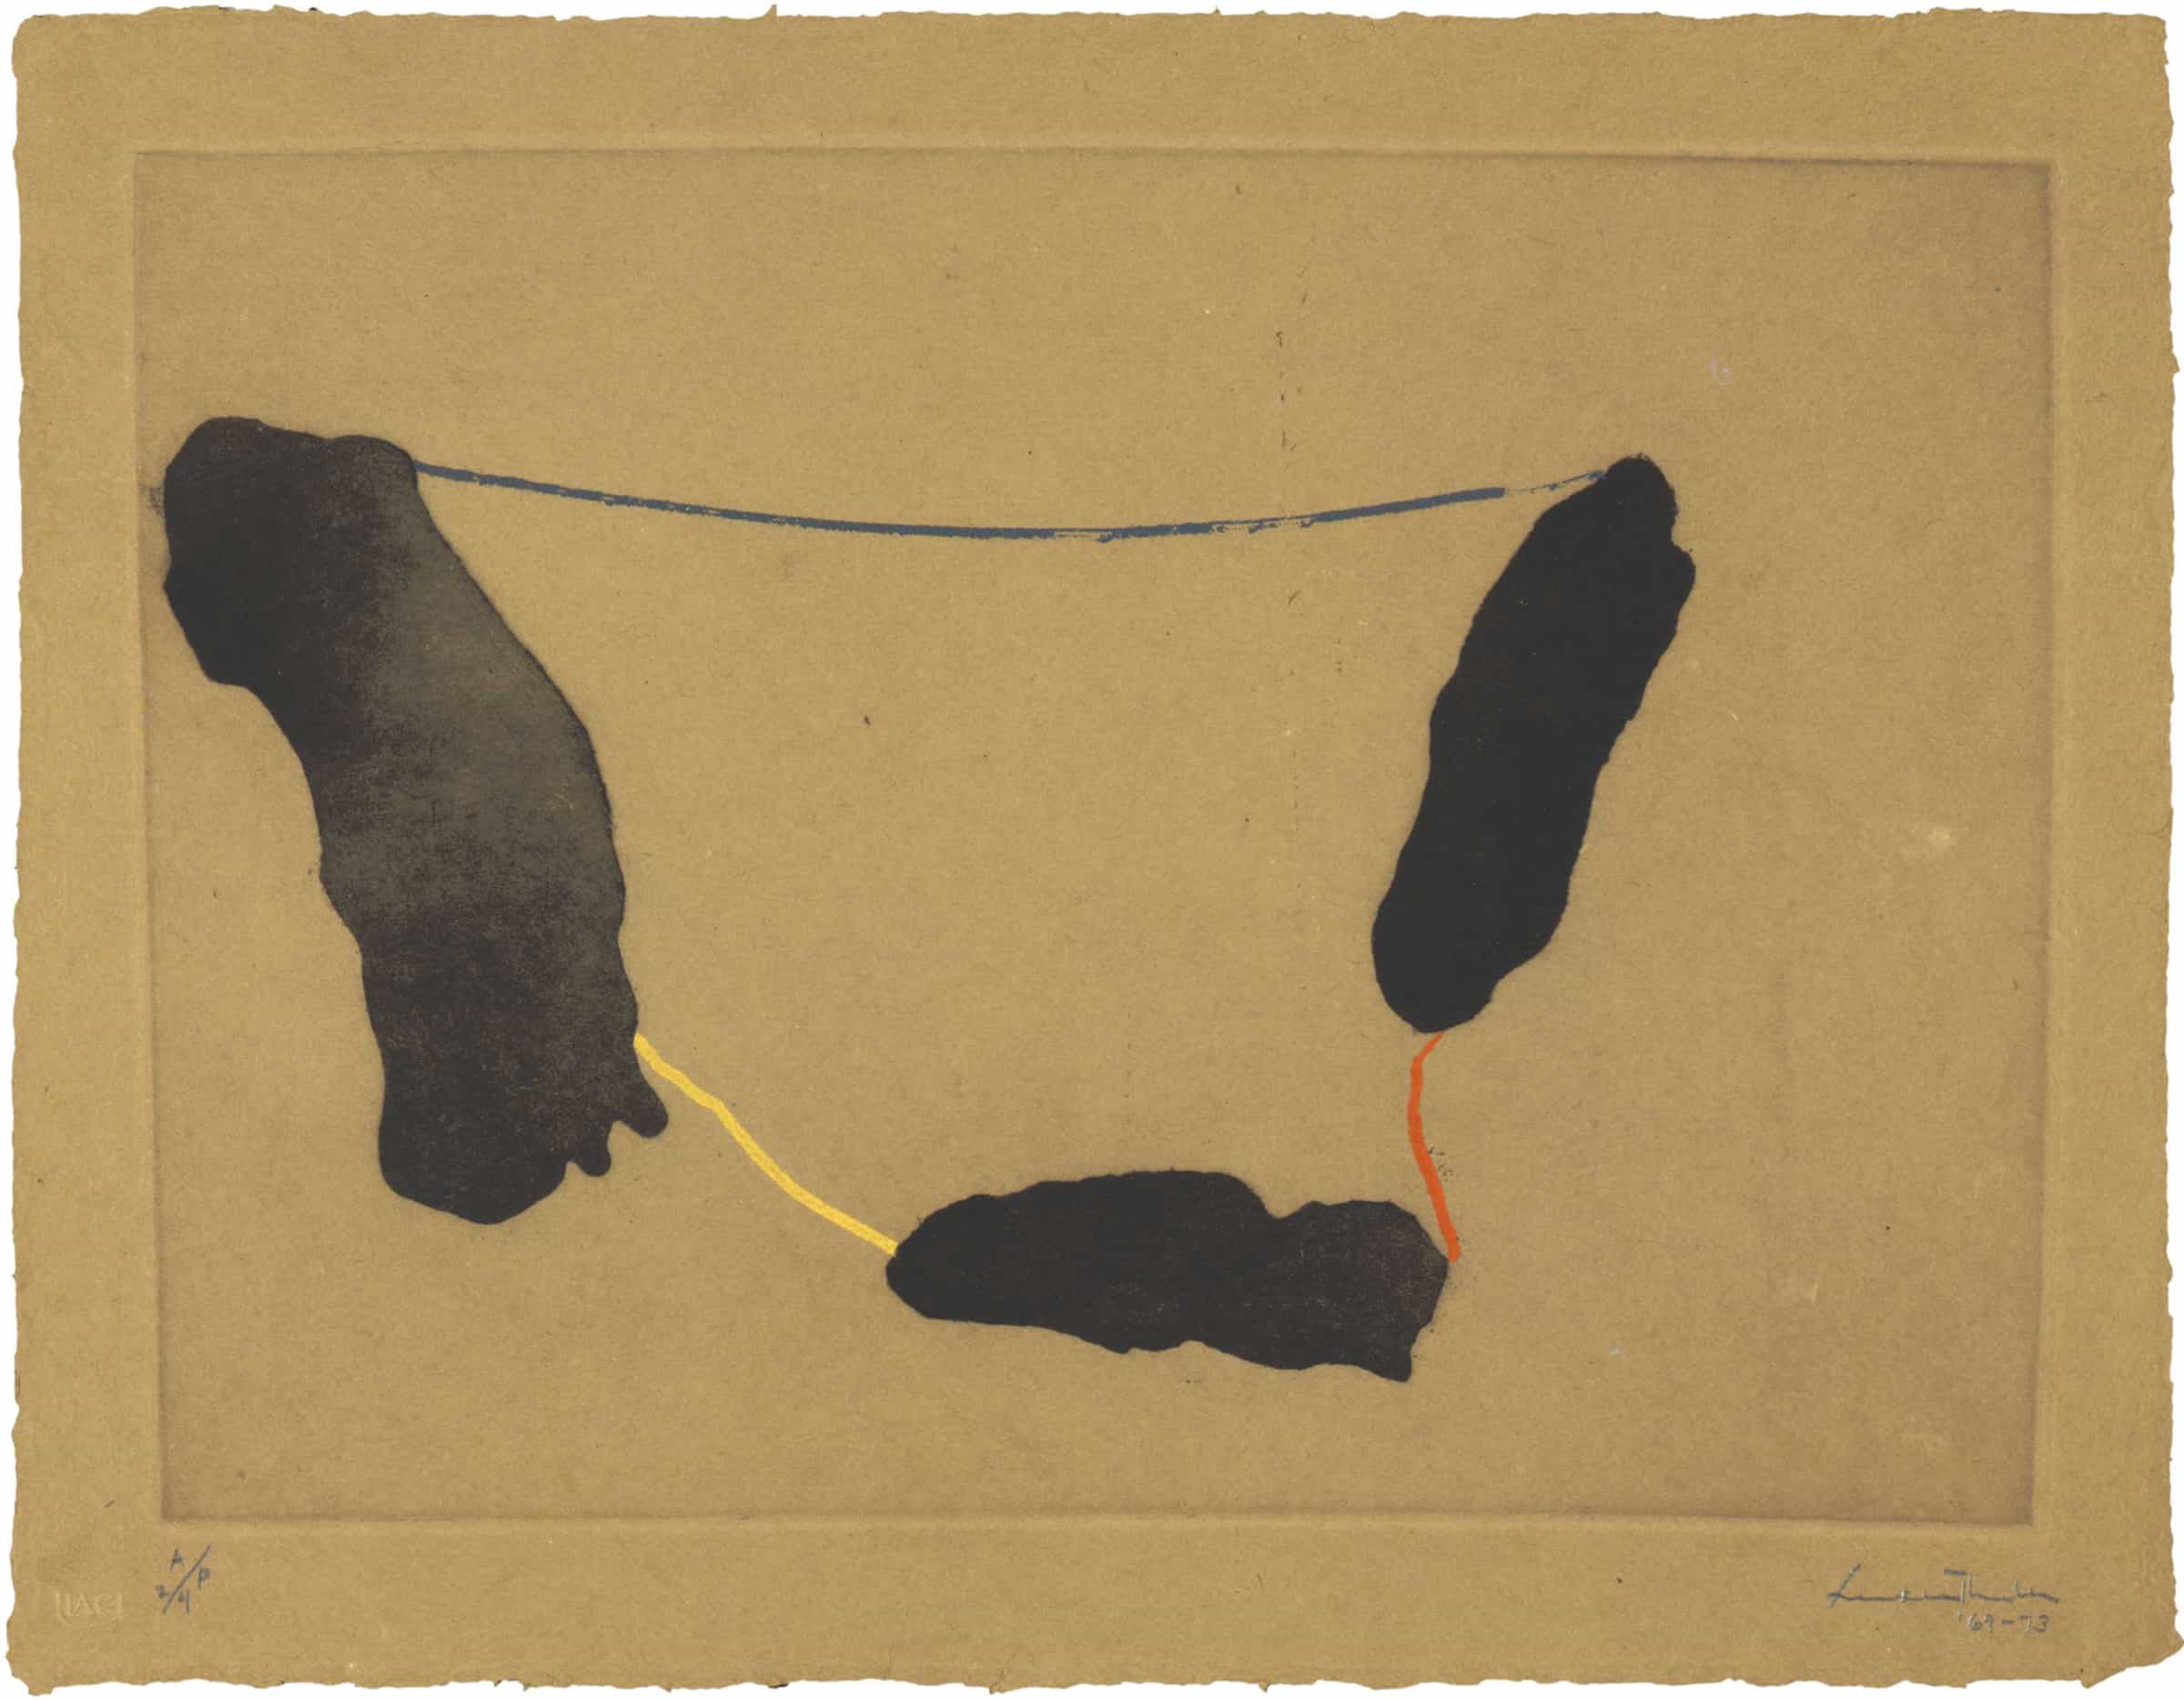 Helen Frankenthaler, Connected By Joy, 1969-73